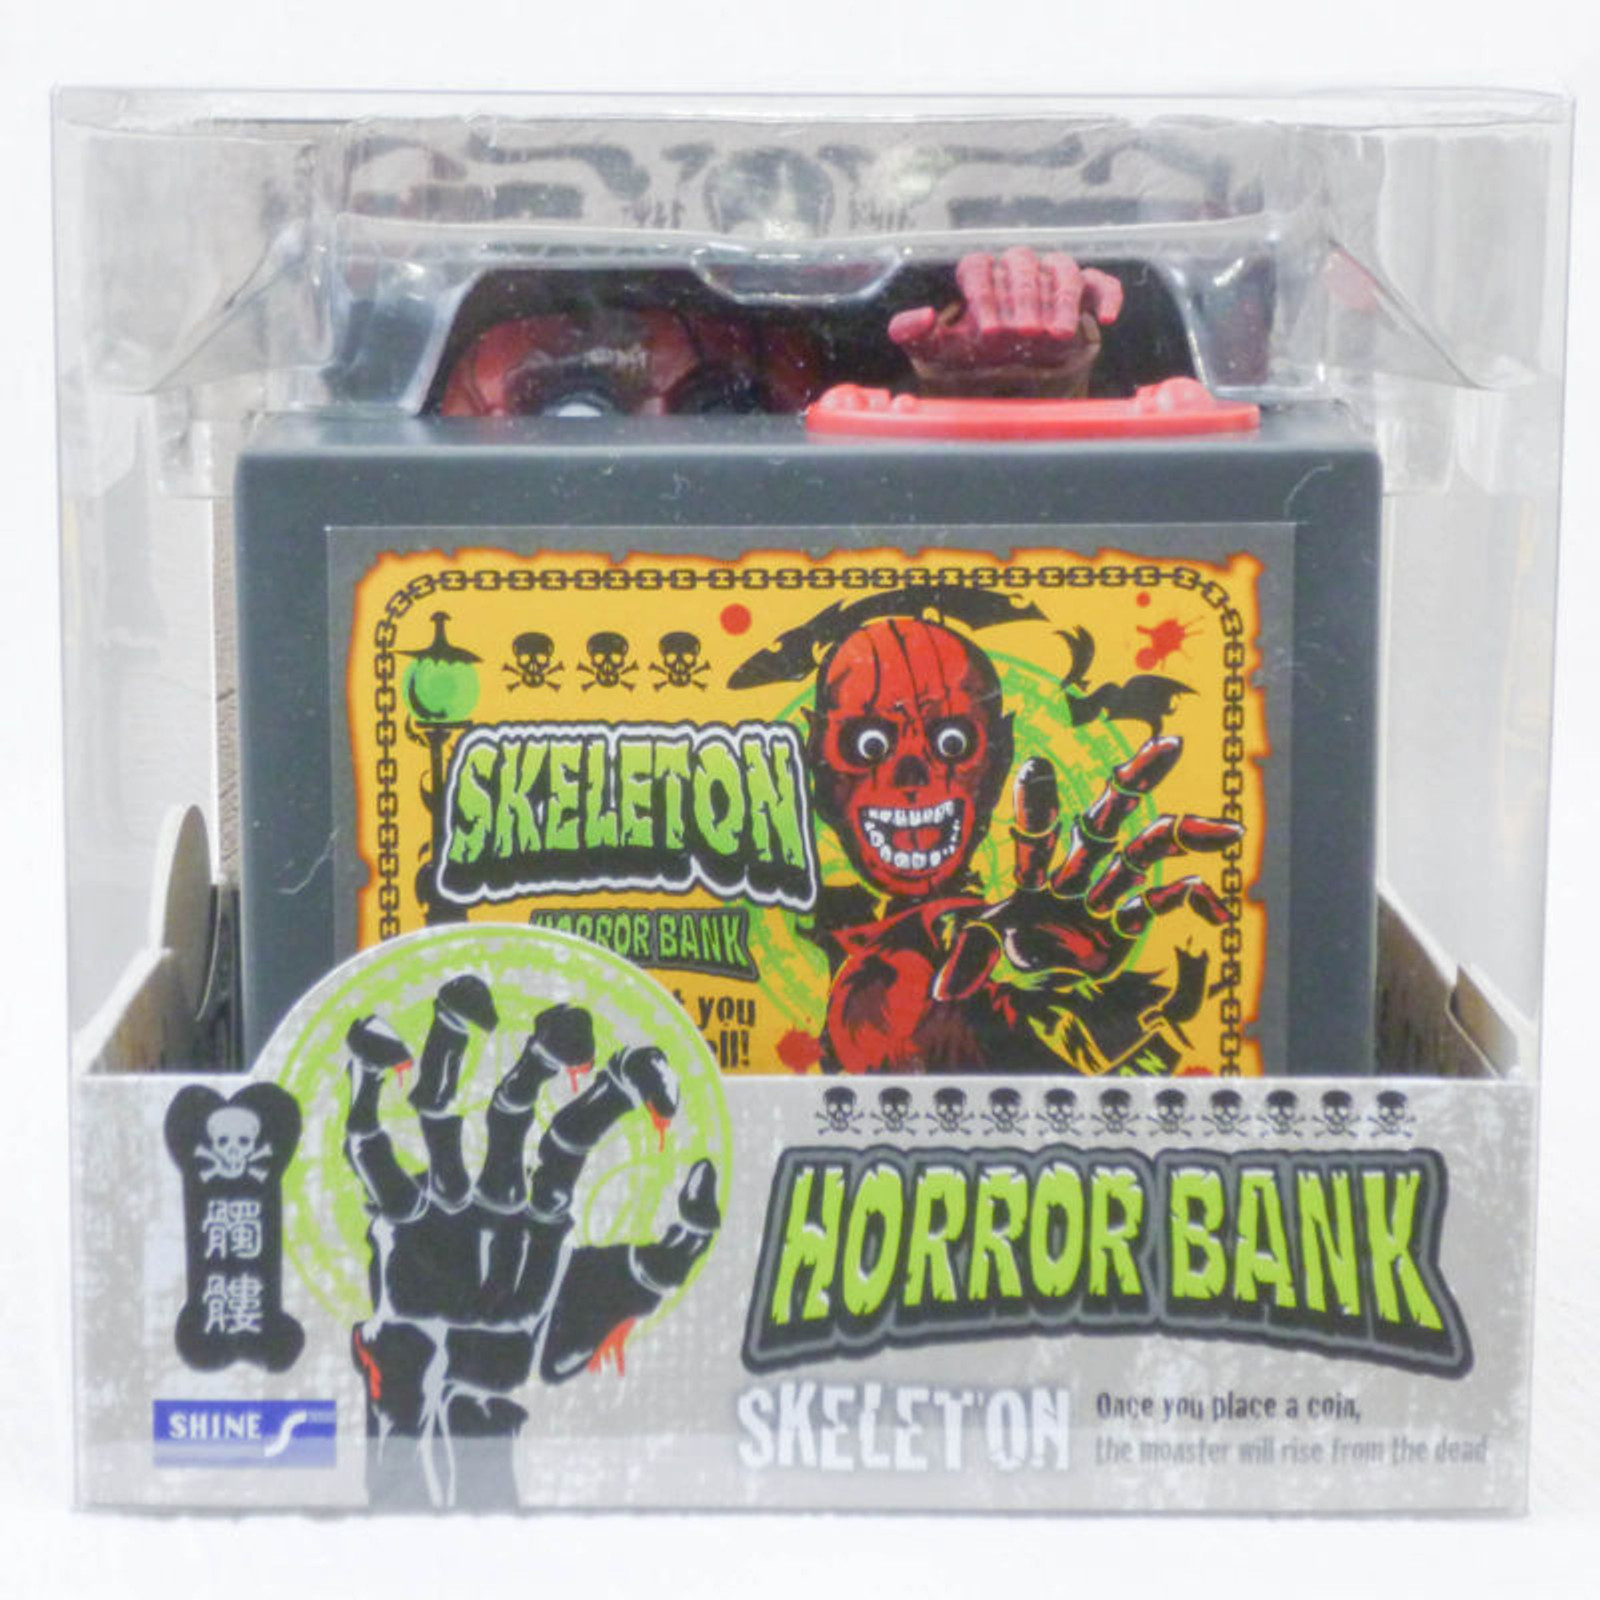 Horror Bank Skeleton Ver. Battery operated Machine Bank JAPAN